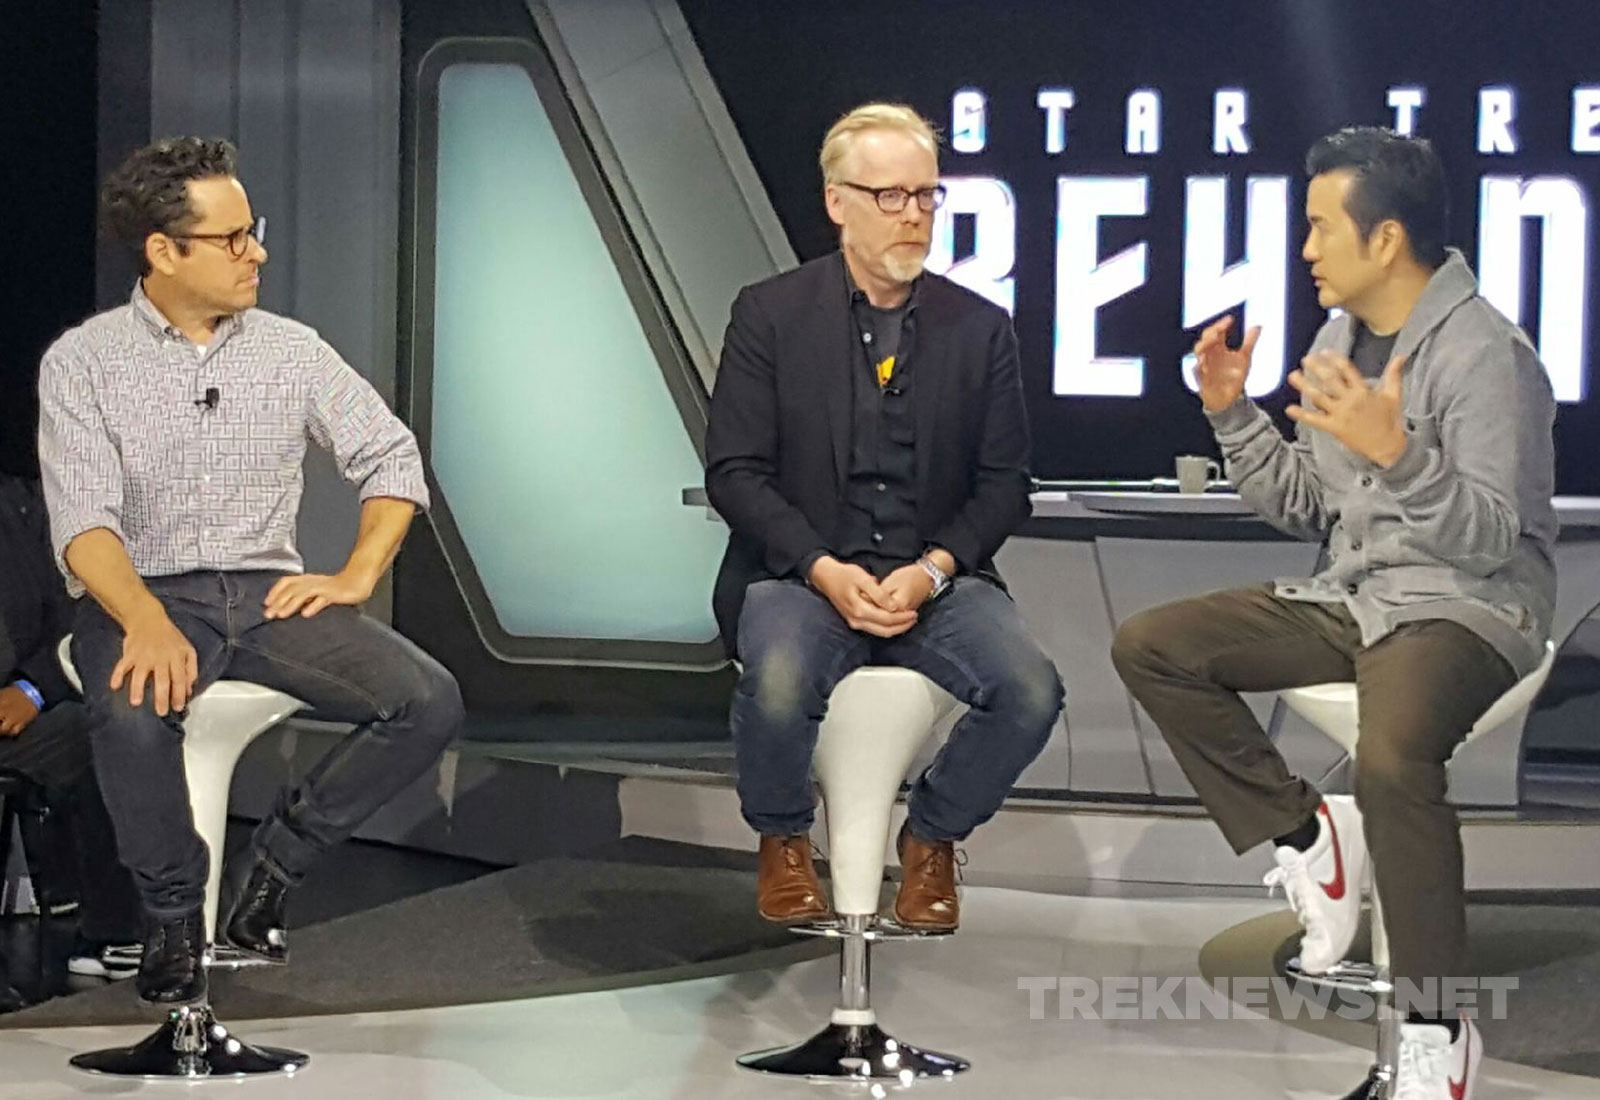 Abrams, Savage and "Star Trek Beyond" director Justin Lin